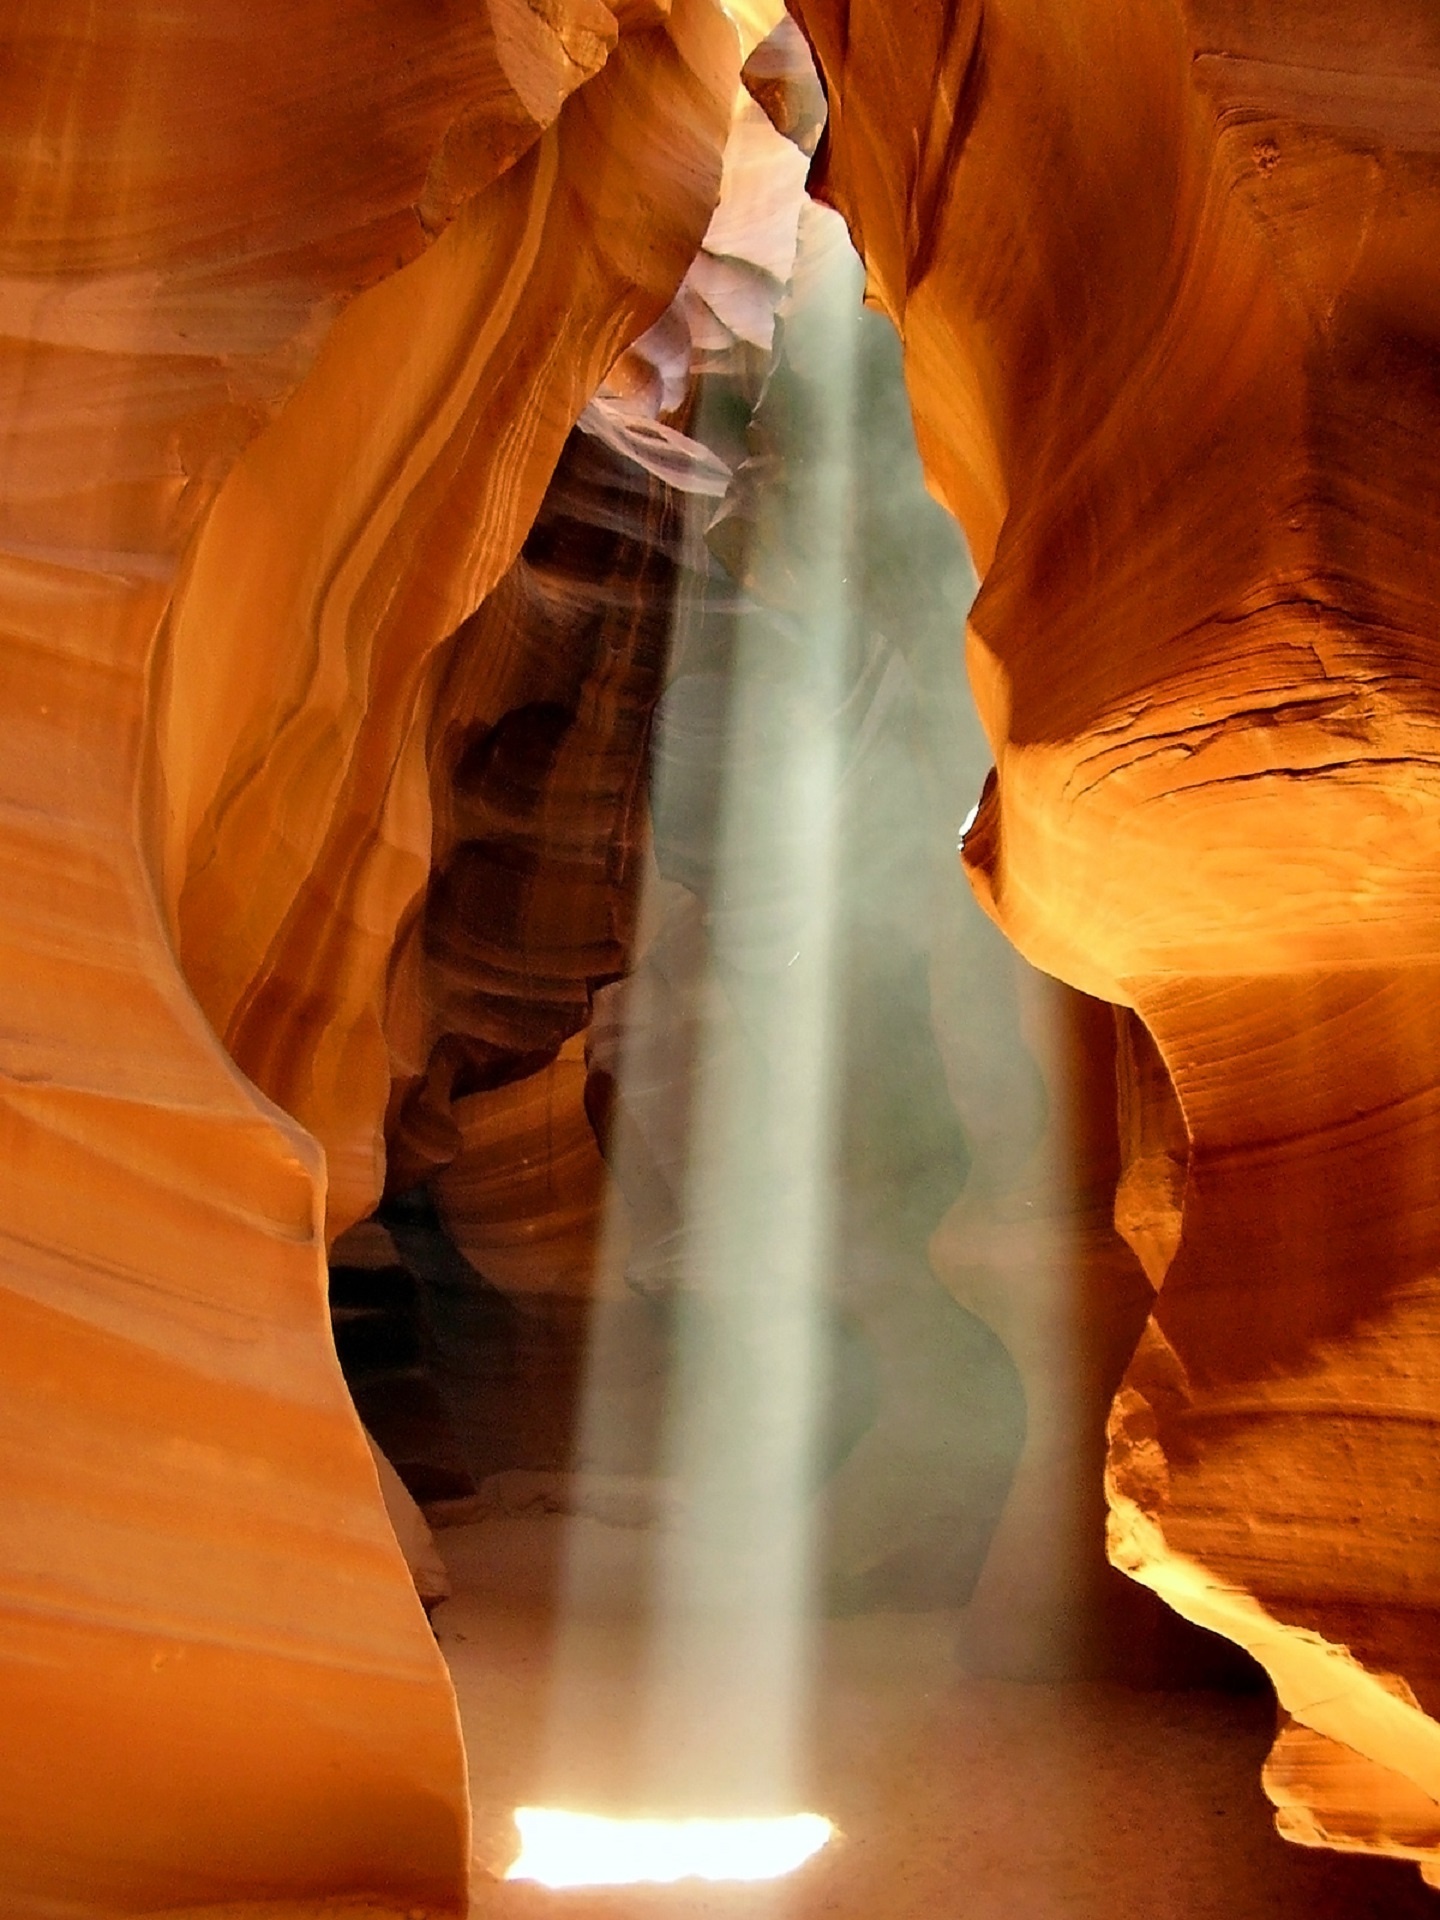 light rays slot canyon free photo